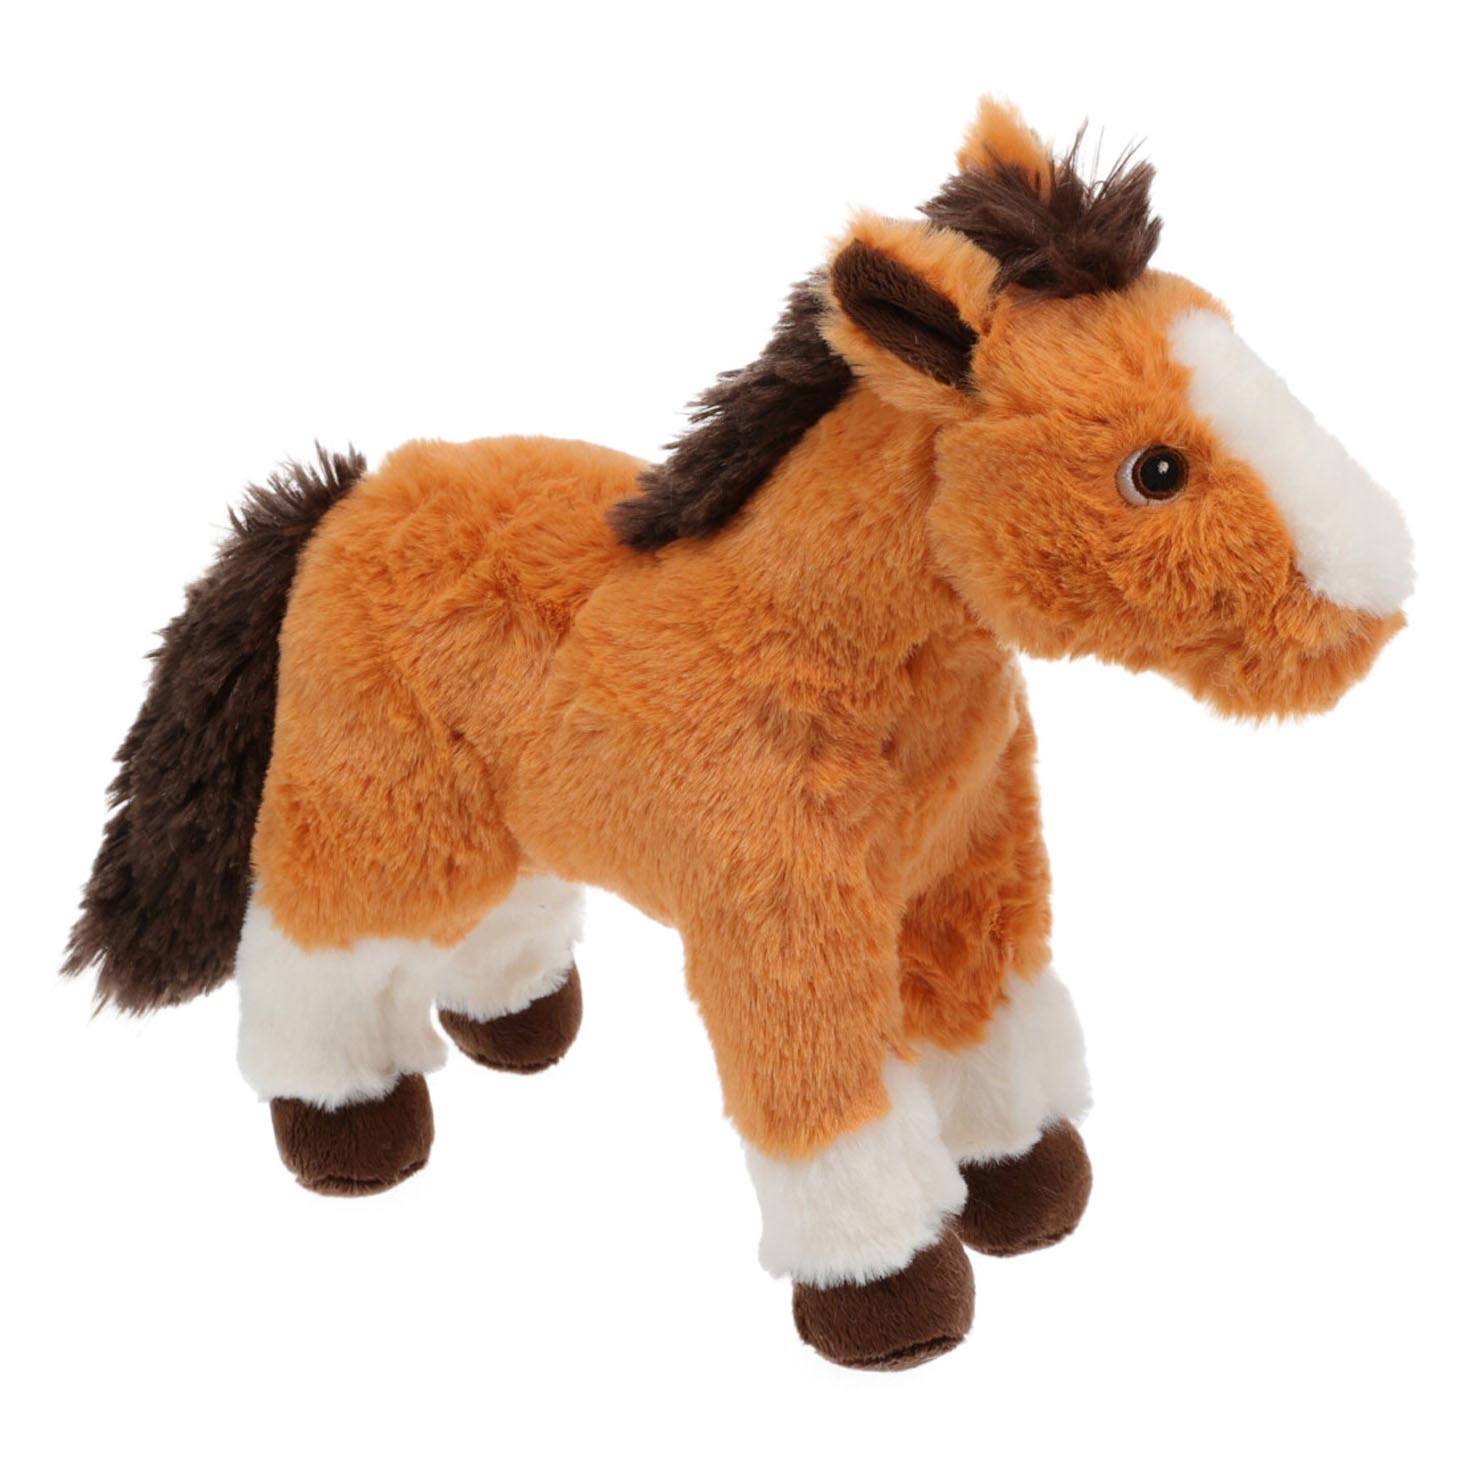 maag timmerman Begin Knuffel Paard - Bruin online kopen? | Lobbes Speelgoed